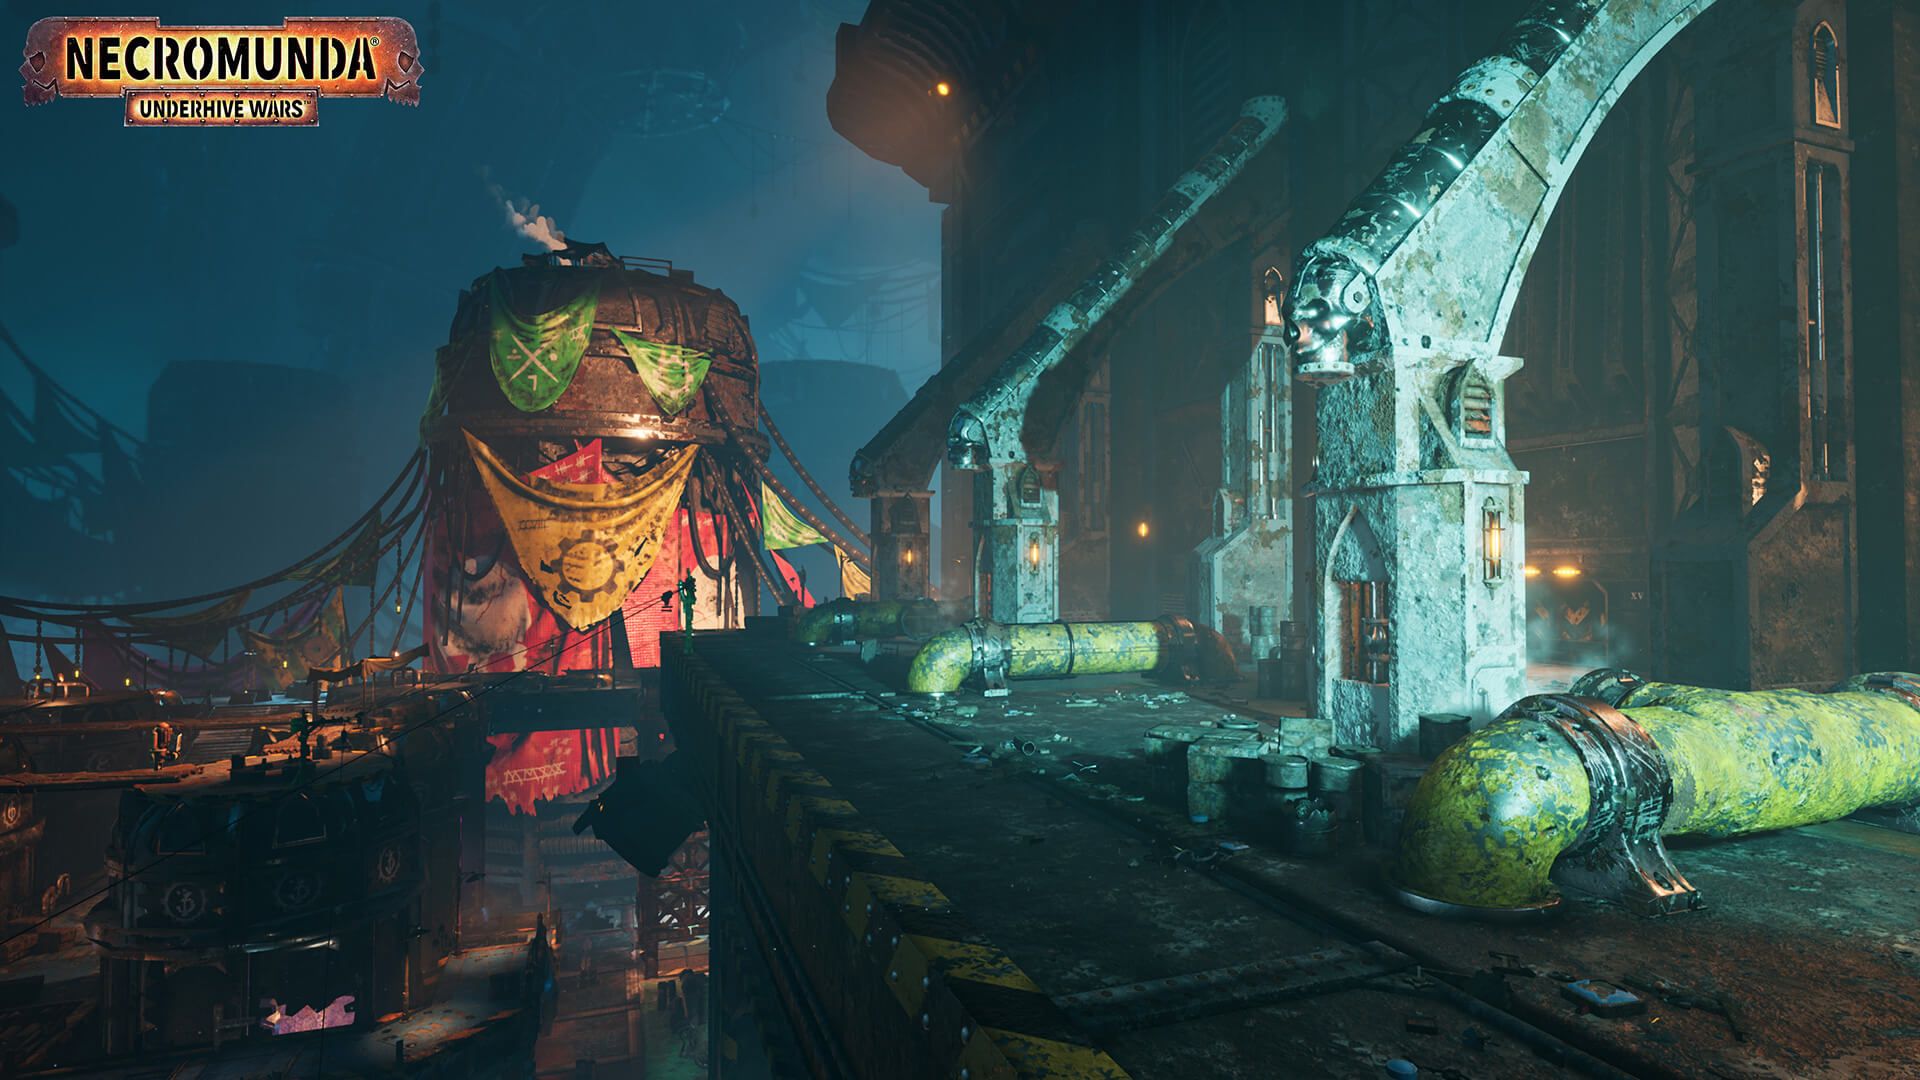 Necromunda: Underhive Wars: The environments showcased in screenshots Home Interactive